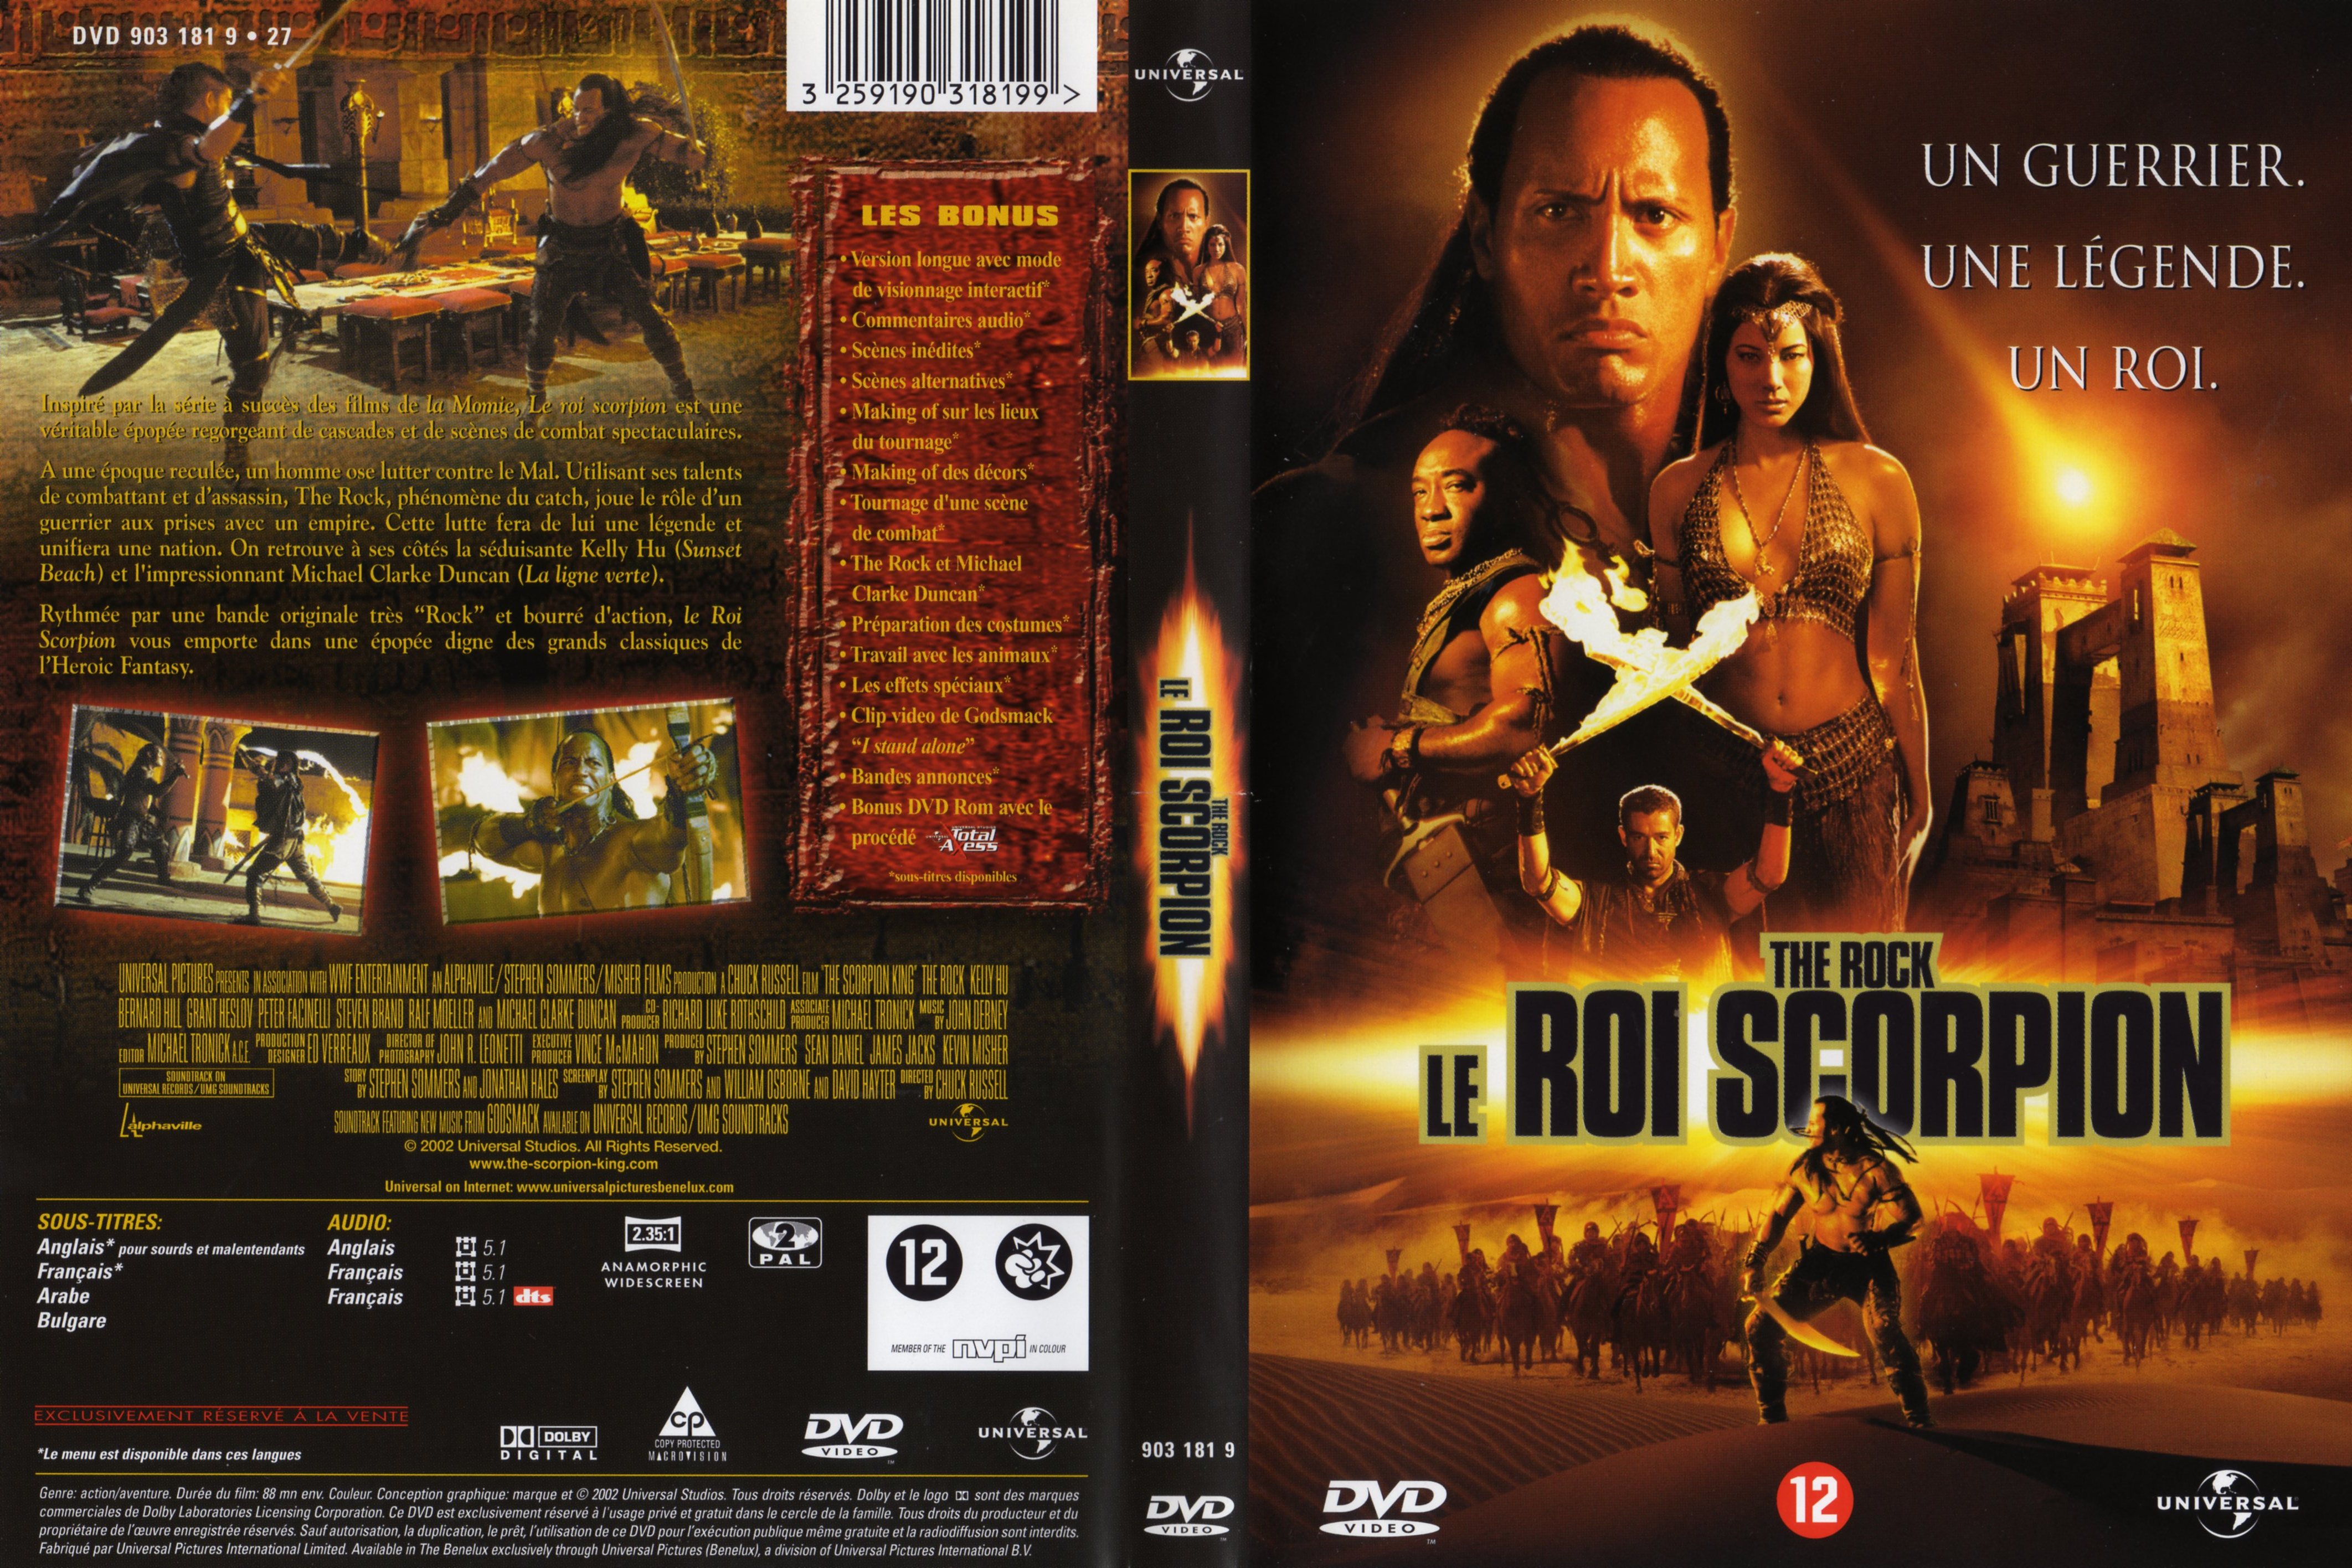 Jaquette DVD Le roi scorpion v2